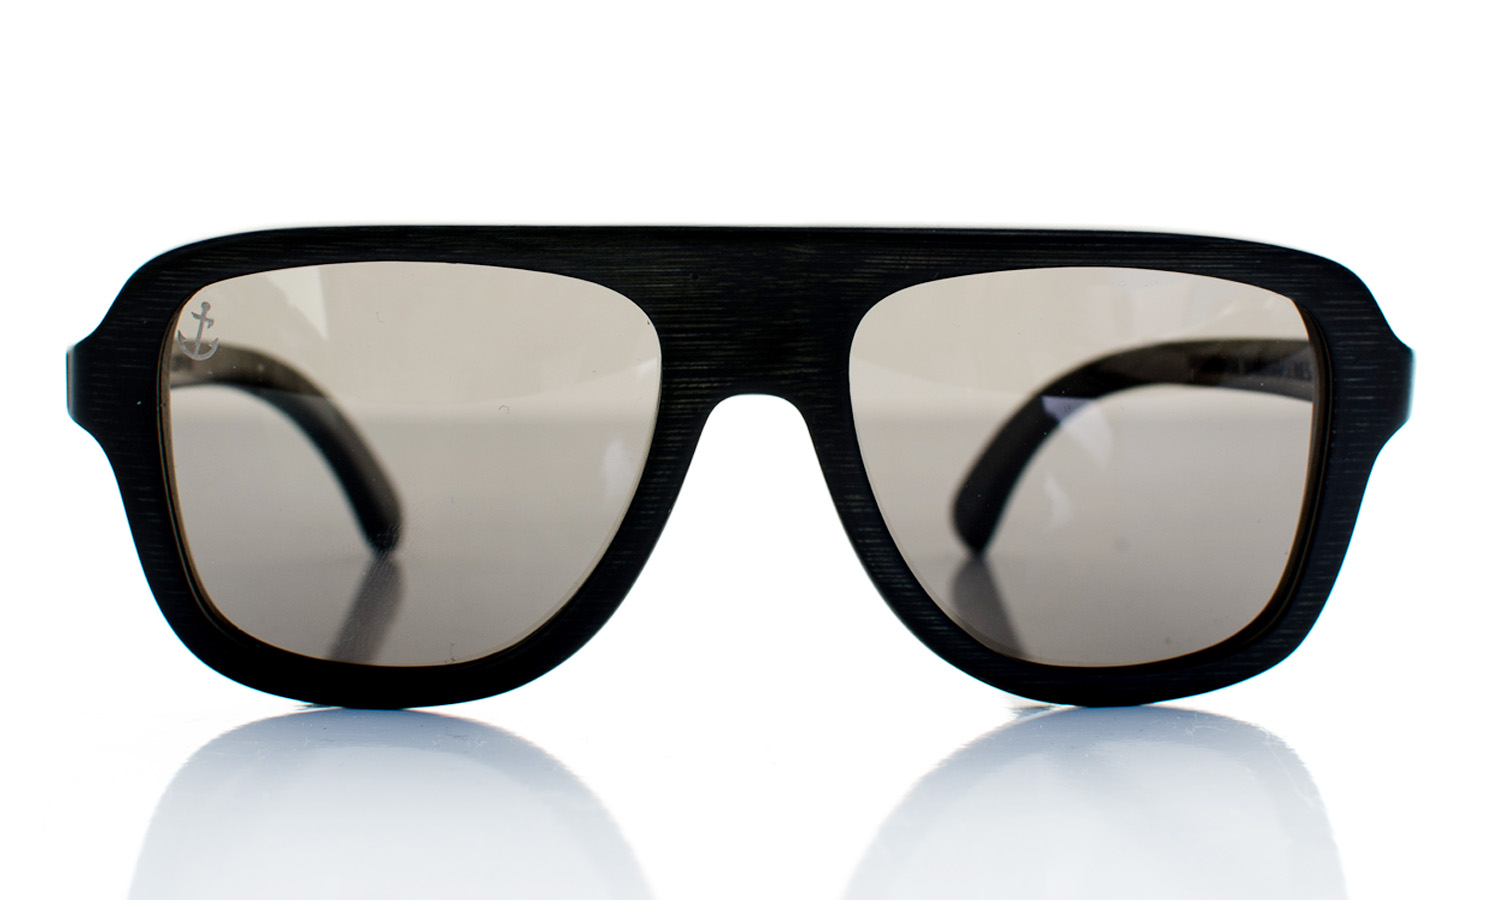 AeroStellar Handcrafted Wooden Eyewear Black Bamboo Wood - Front View